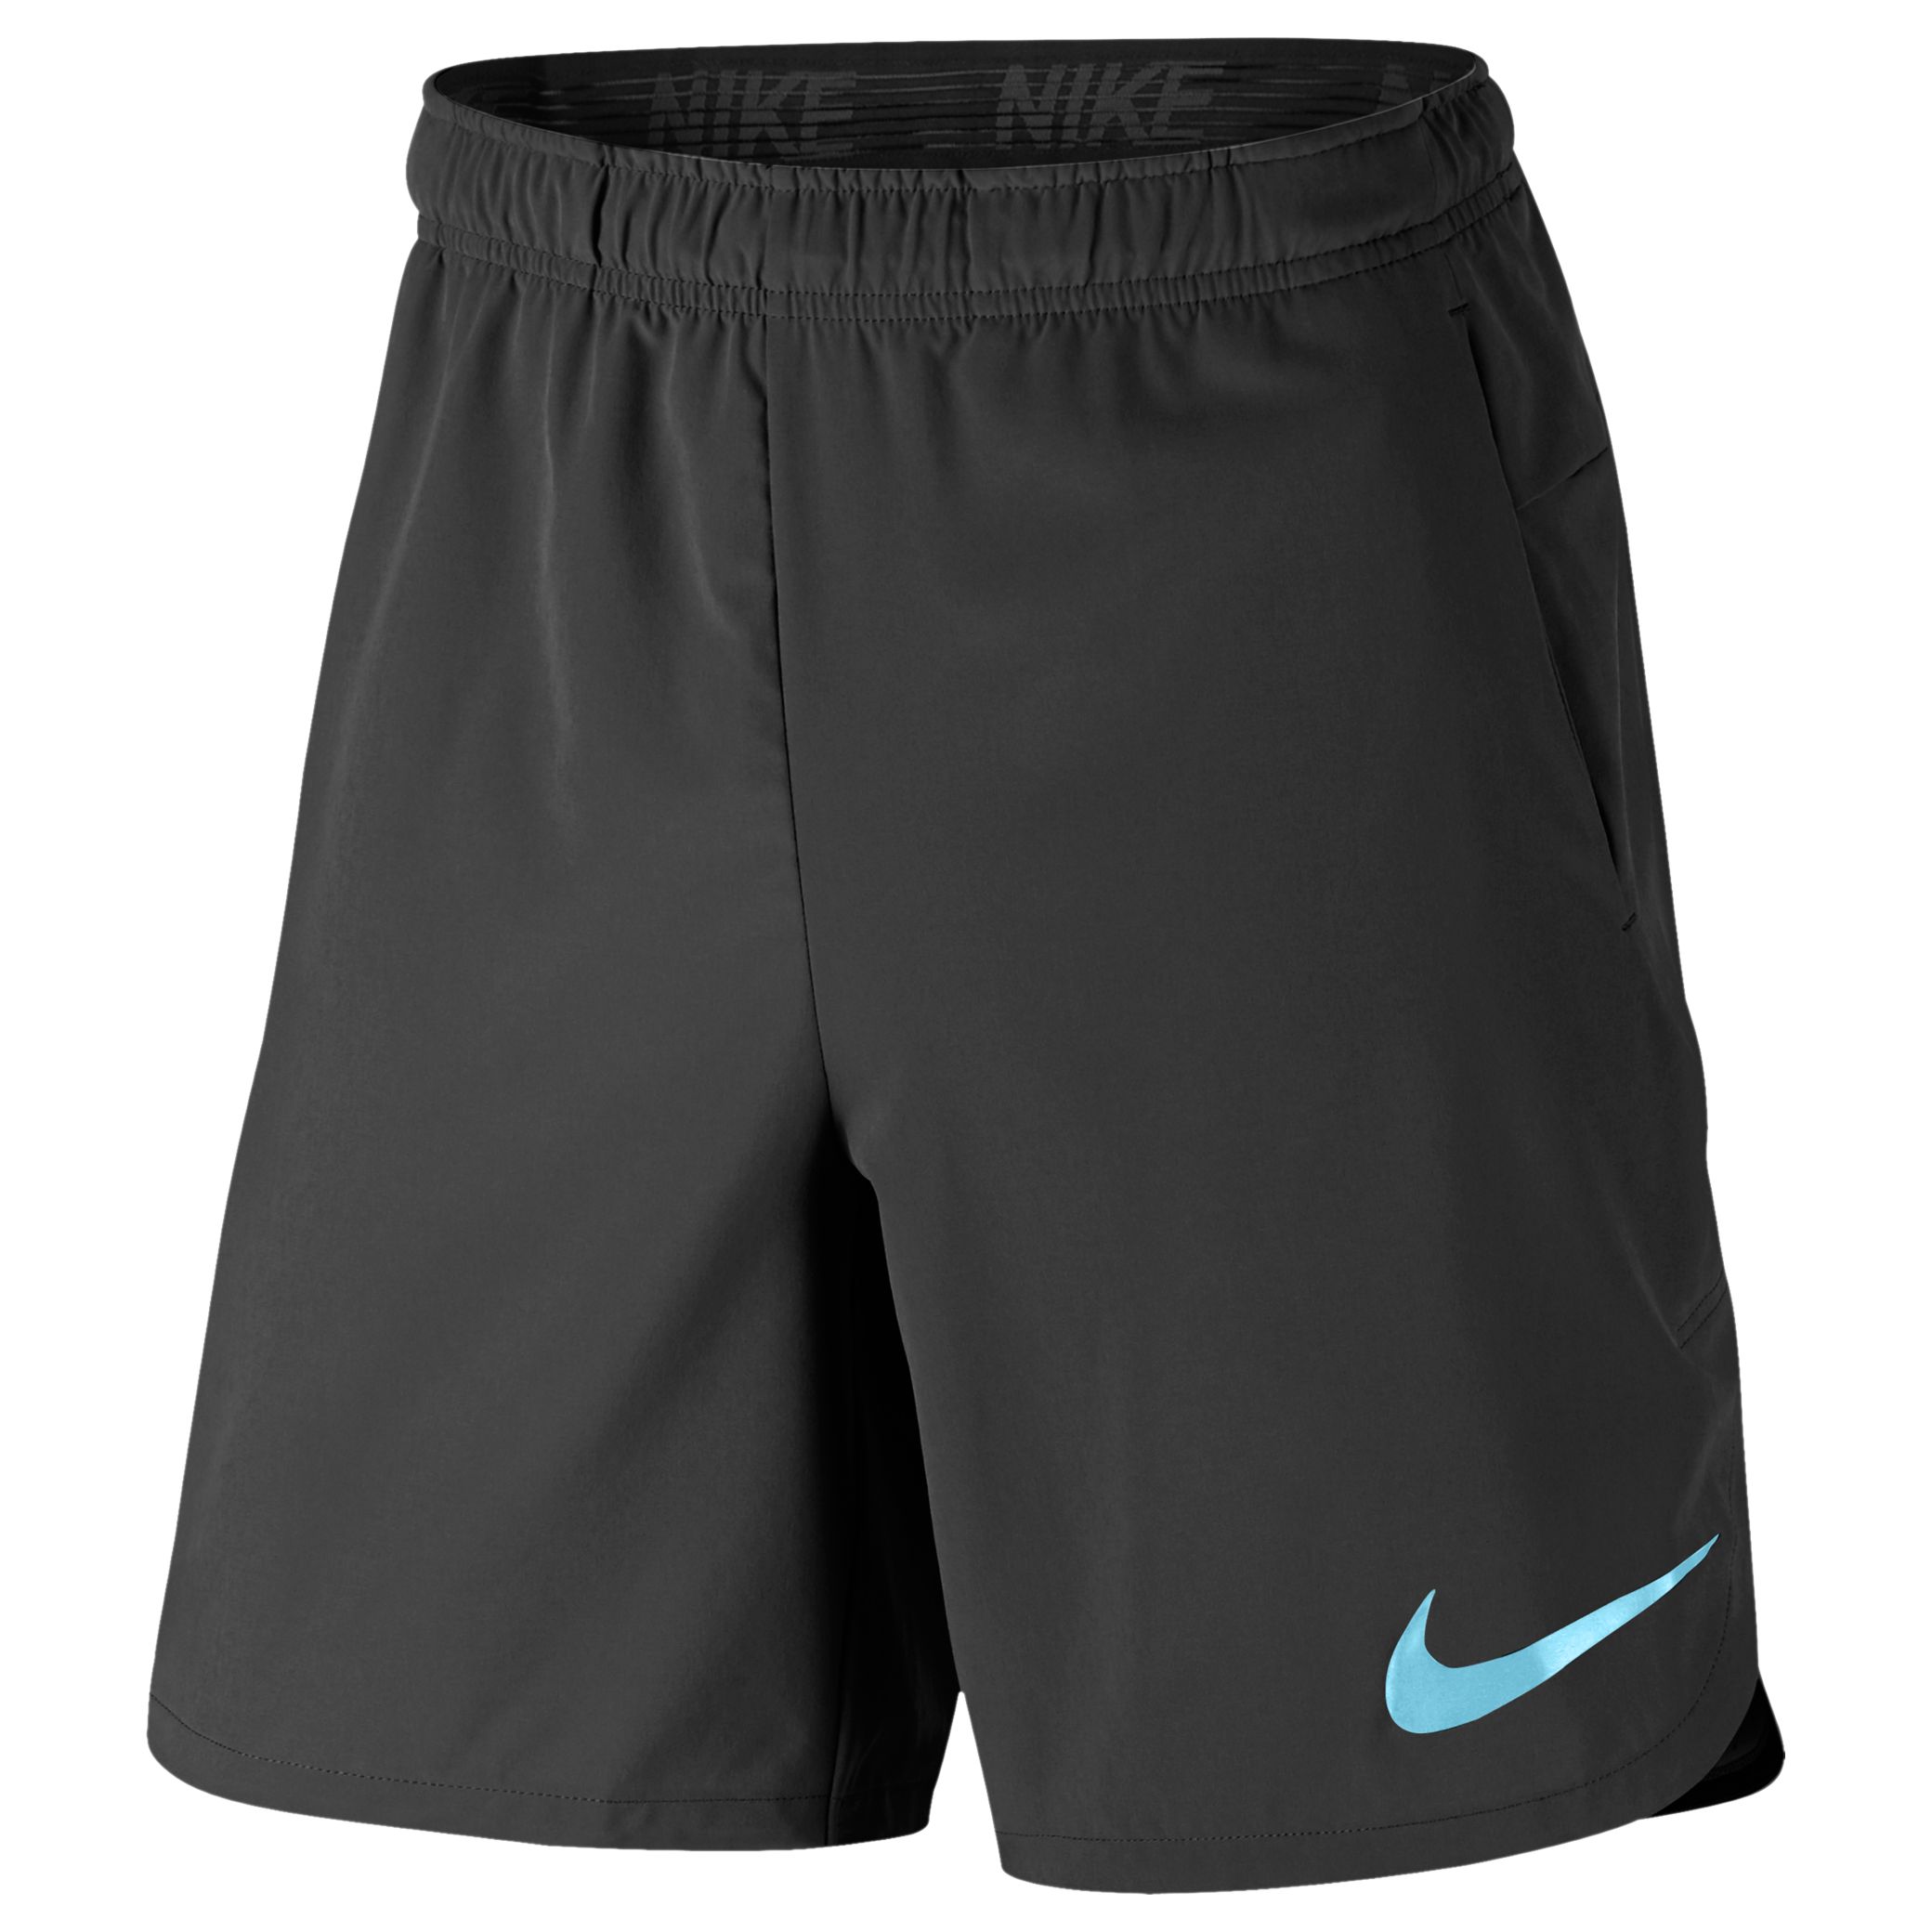 Nike Flex Training Shorts, Black/Blue, S